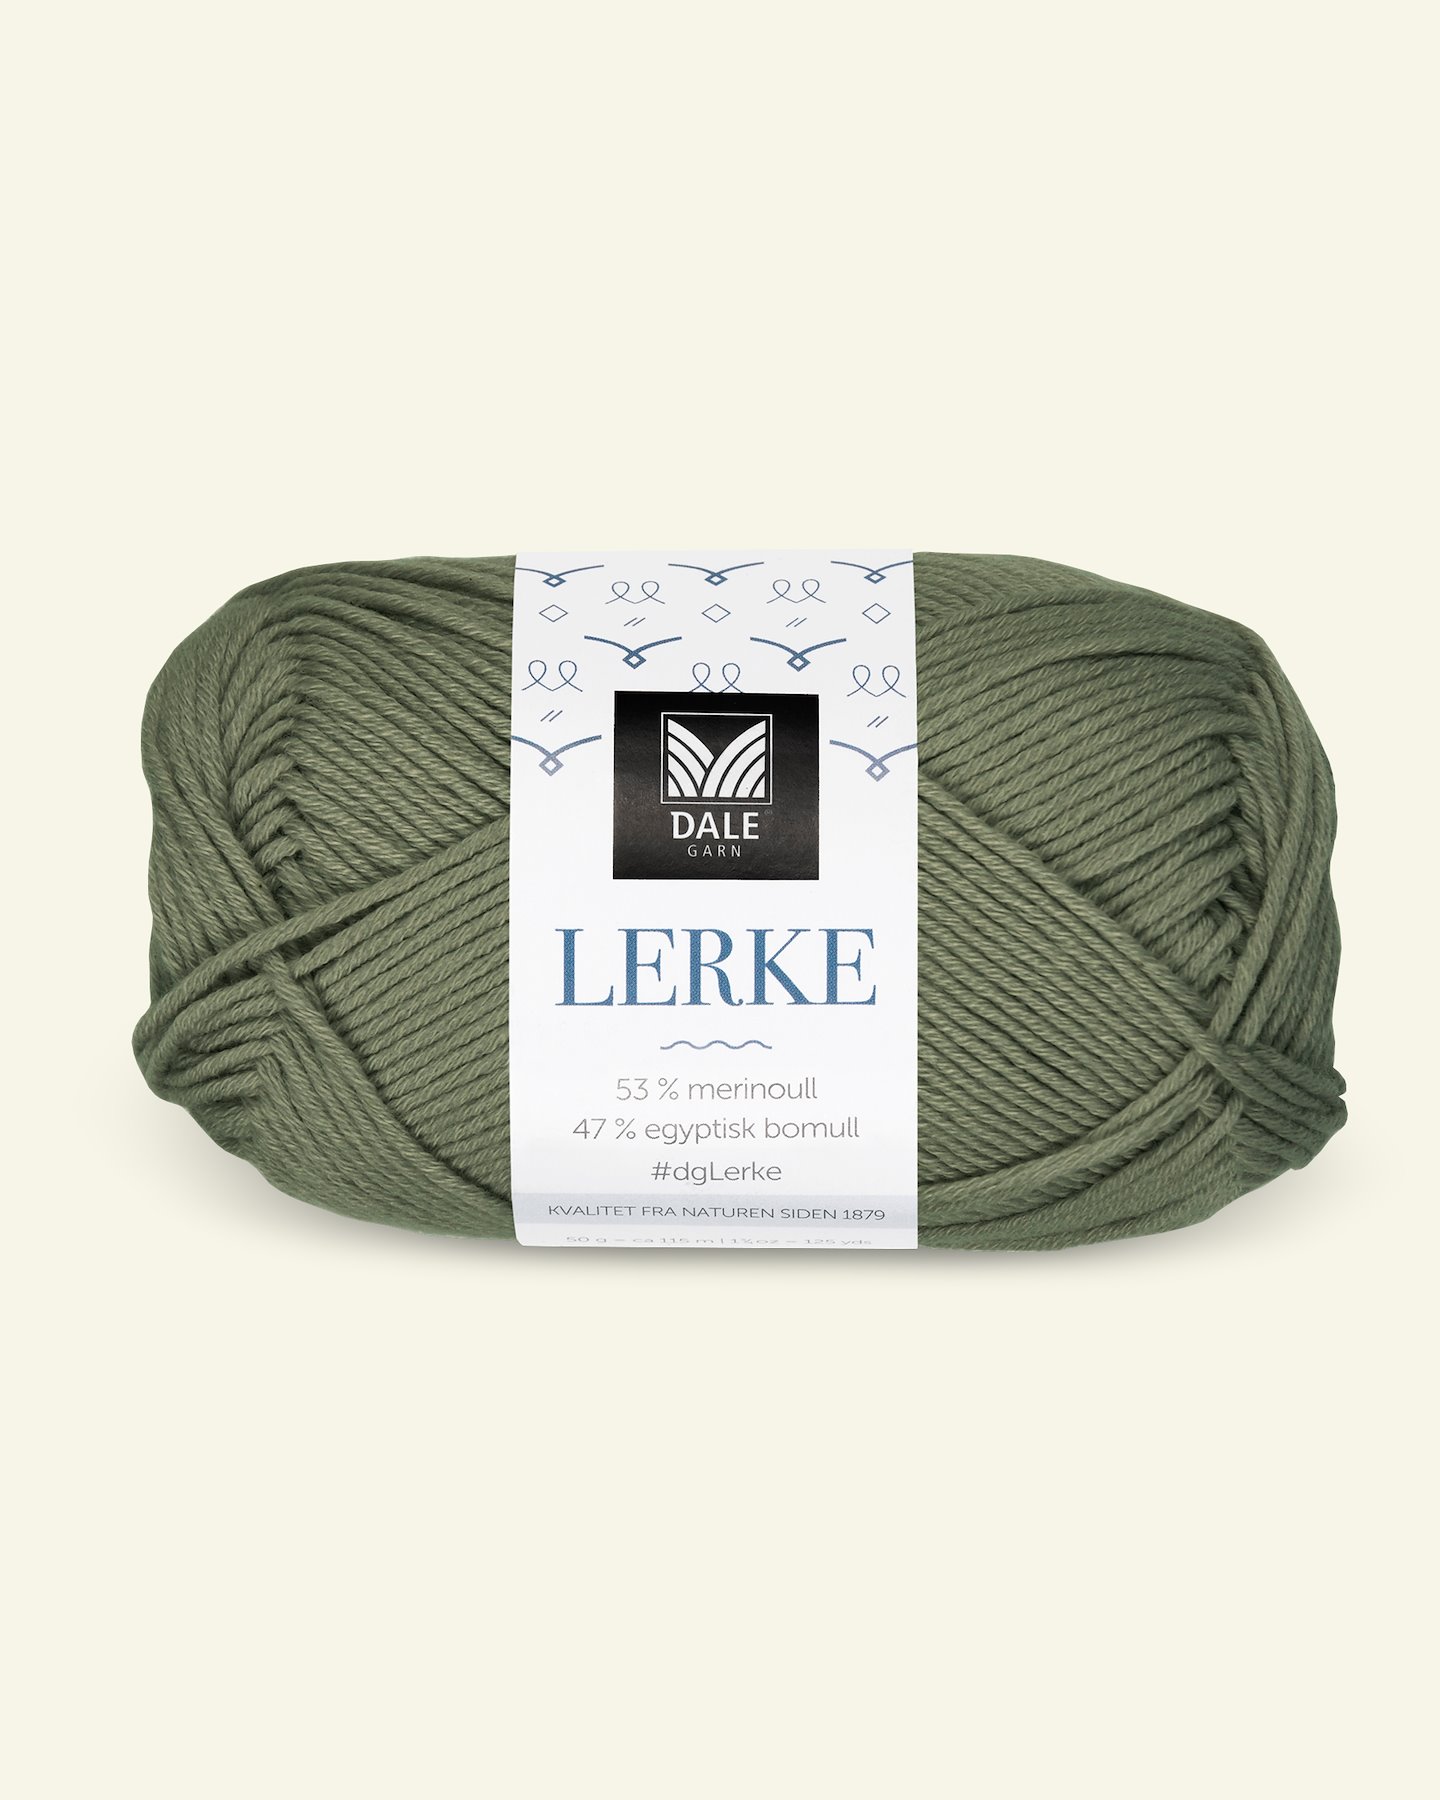 Dale Garn, merino cotton yarn "Lerke", dark olive (8118) 90000849_pack